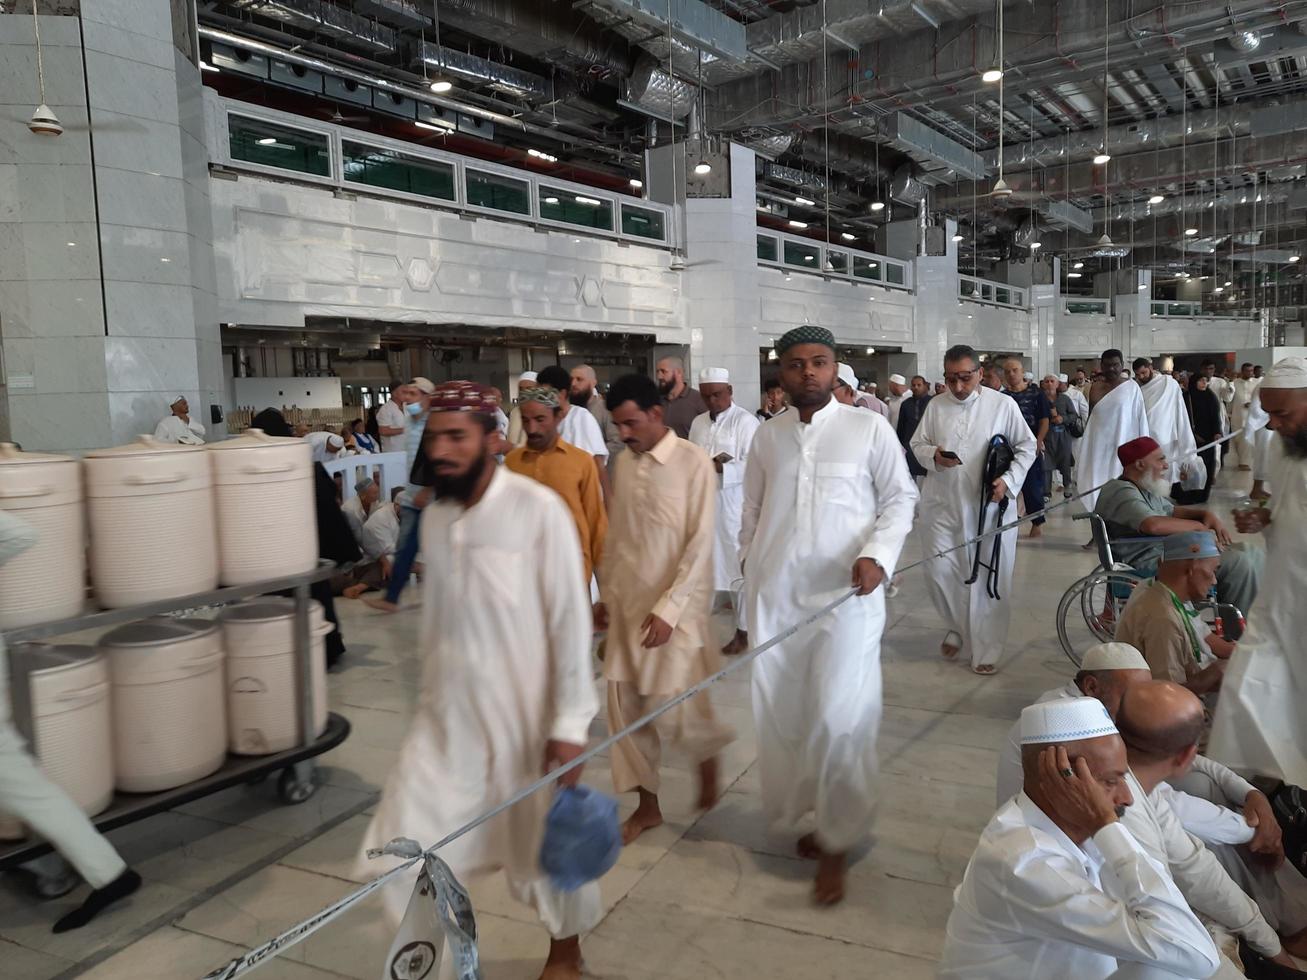 Mecca, Saudi Arabia, Nov 2022 - Pilgrims from around the world wait for Friday prayers on the first floor of Masjid al-Haram in Makkah, Saudi Arabia. photo